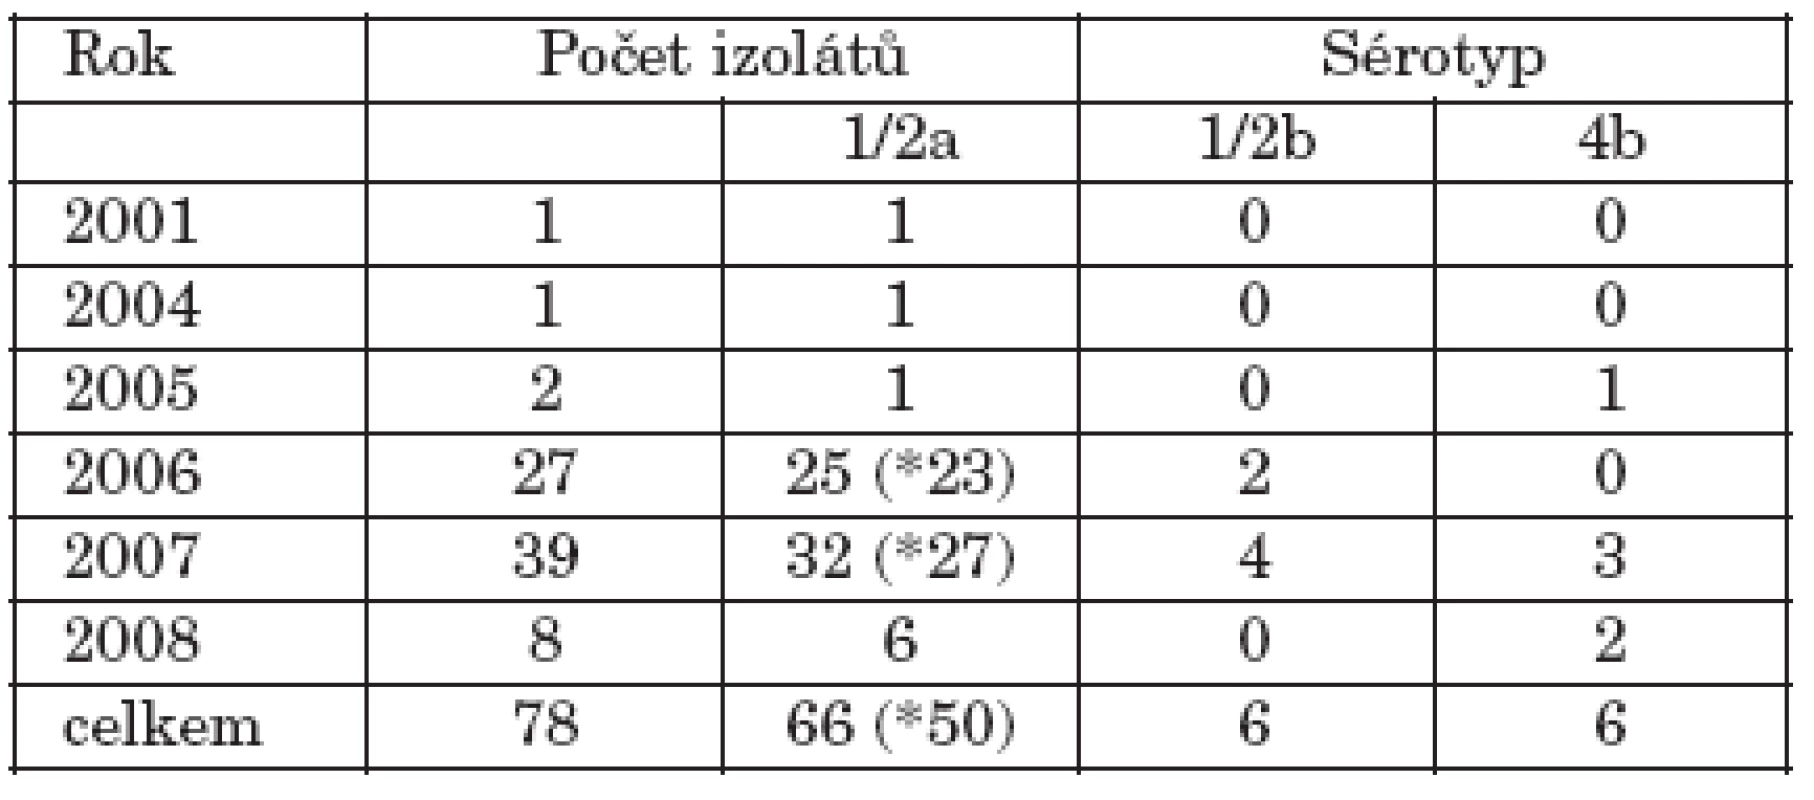 Rok izolace, počet a sérotyp vyšetřovaných kmenů L. monocytogenes
Table 1. Years of isolation, numbers and serotypes of tested strains of L. monocytogenes